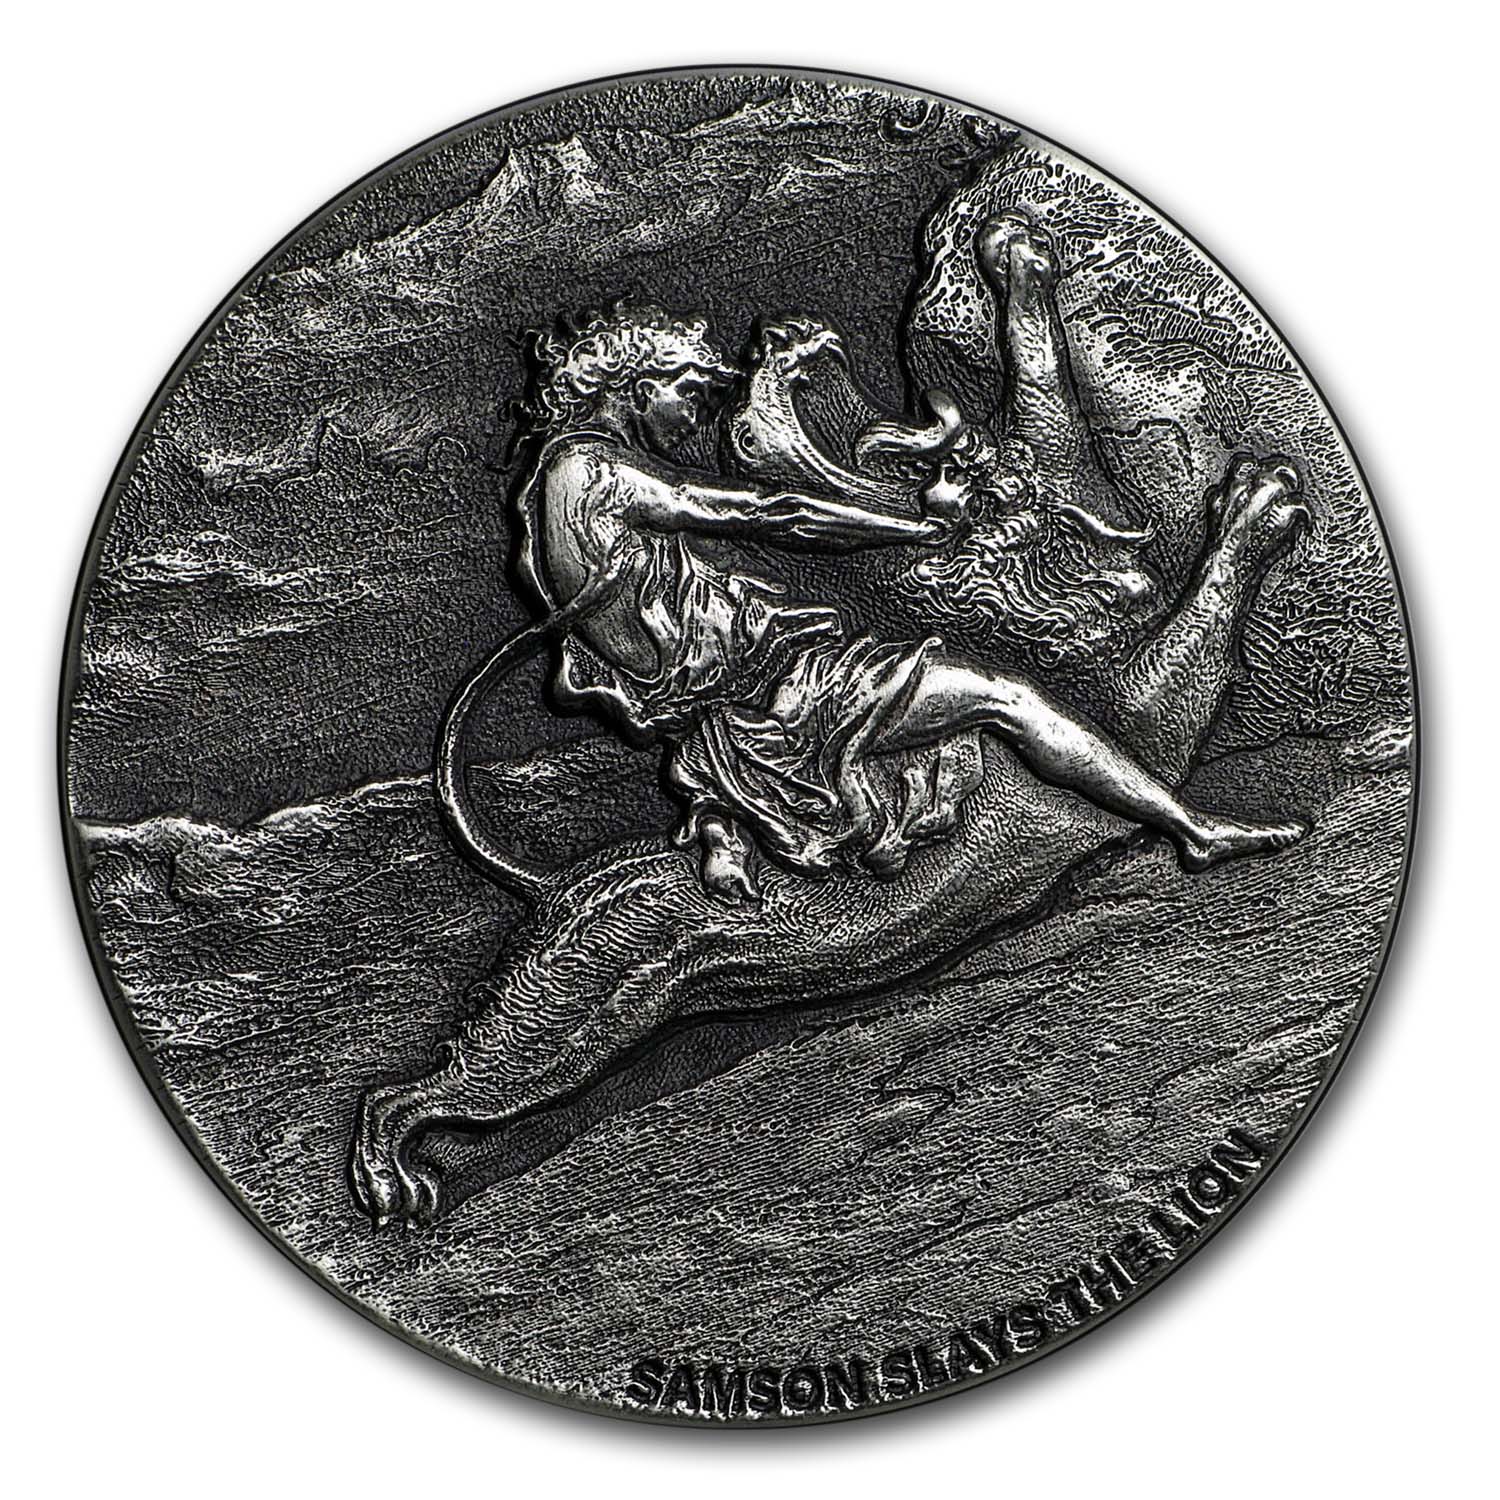 Buy 2019 2 oz Silver Coin - Biblical Series (Samson Slays the Lion) - Click Image to Close